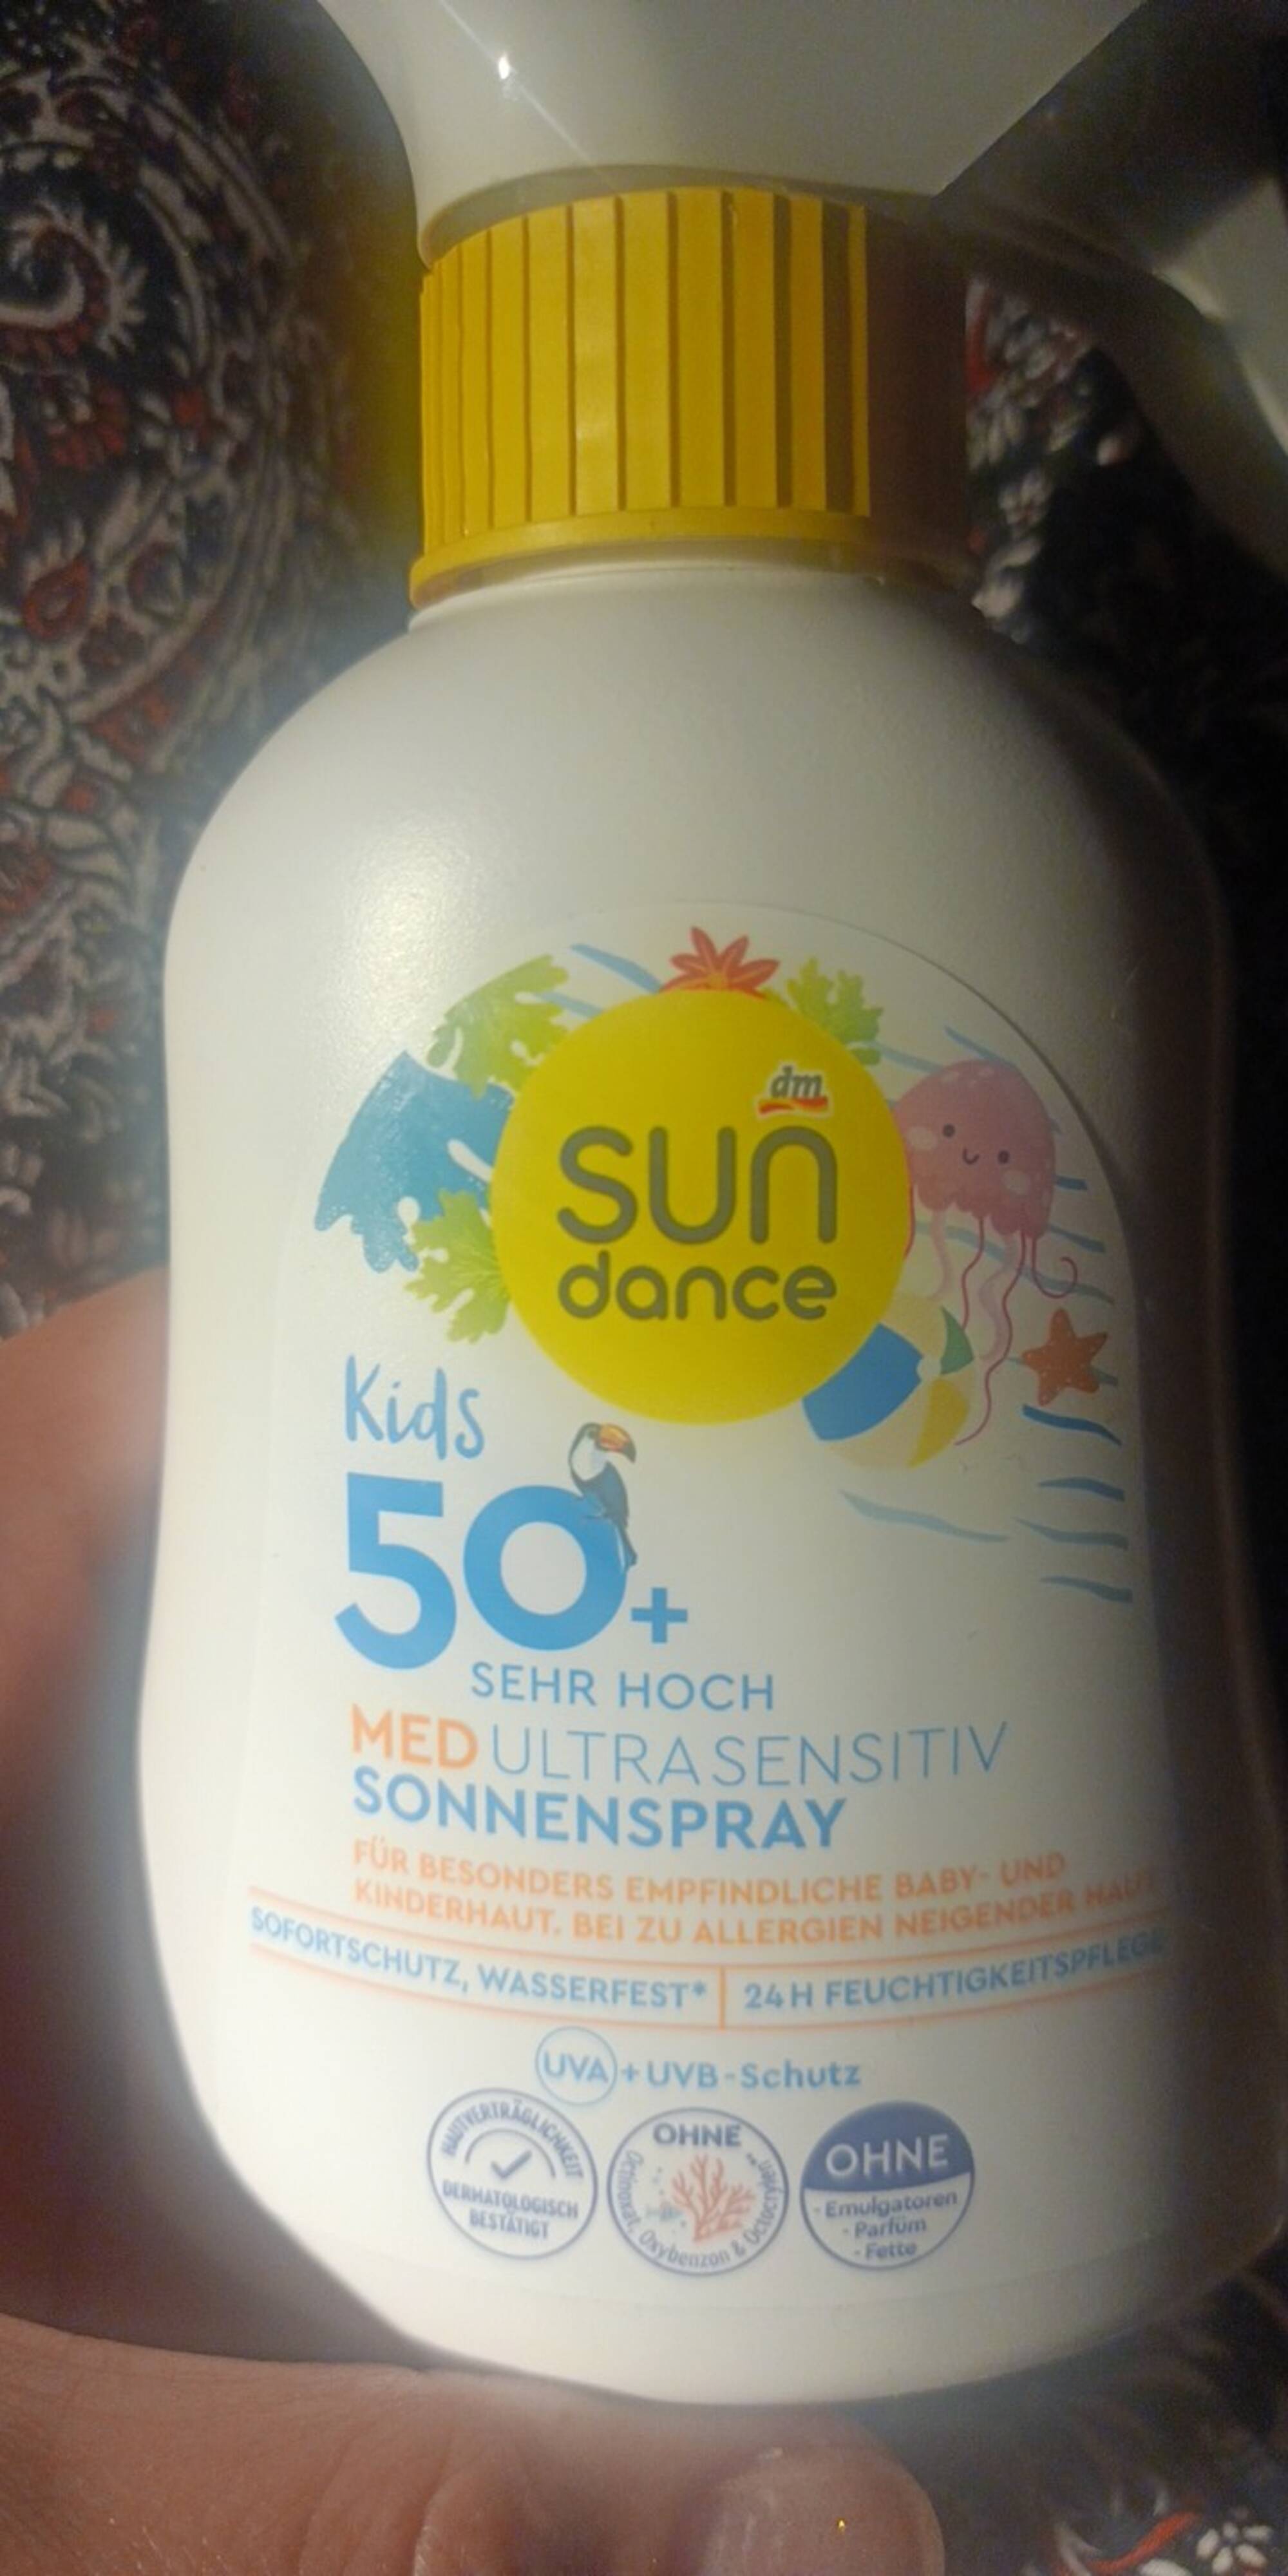 SUNDANCE - Sonnenspray kids 50+